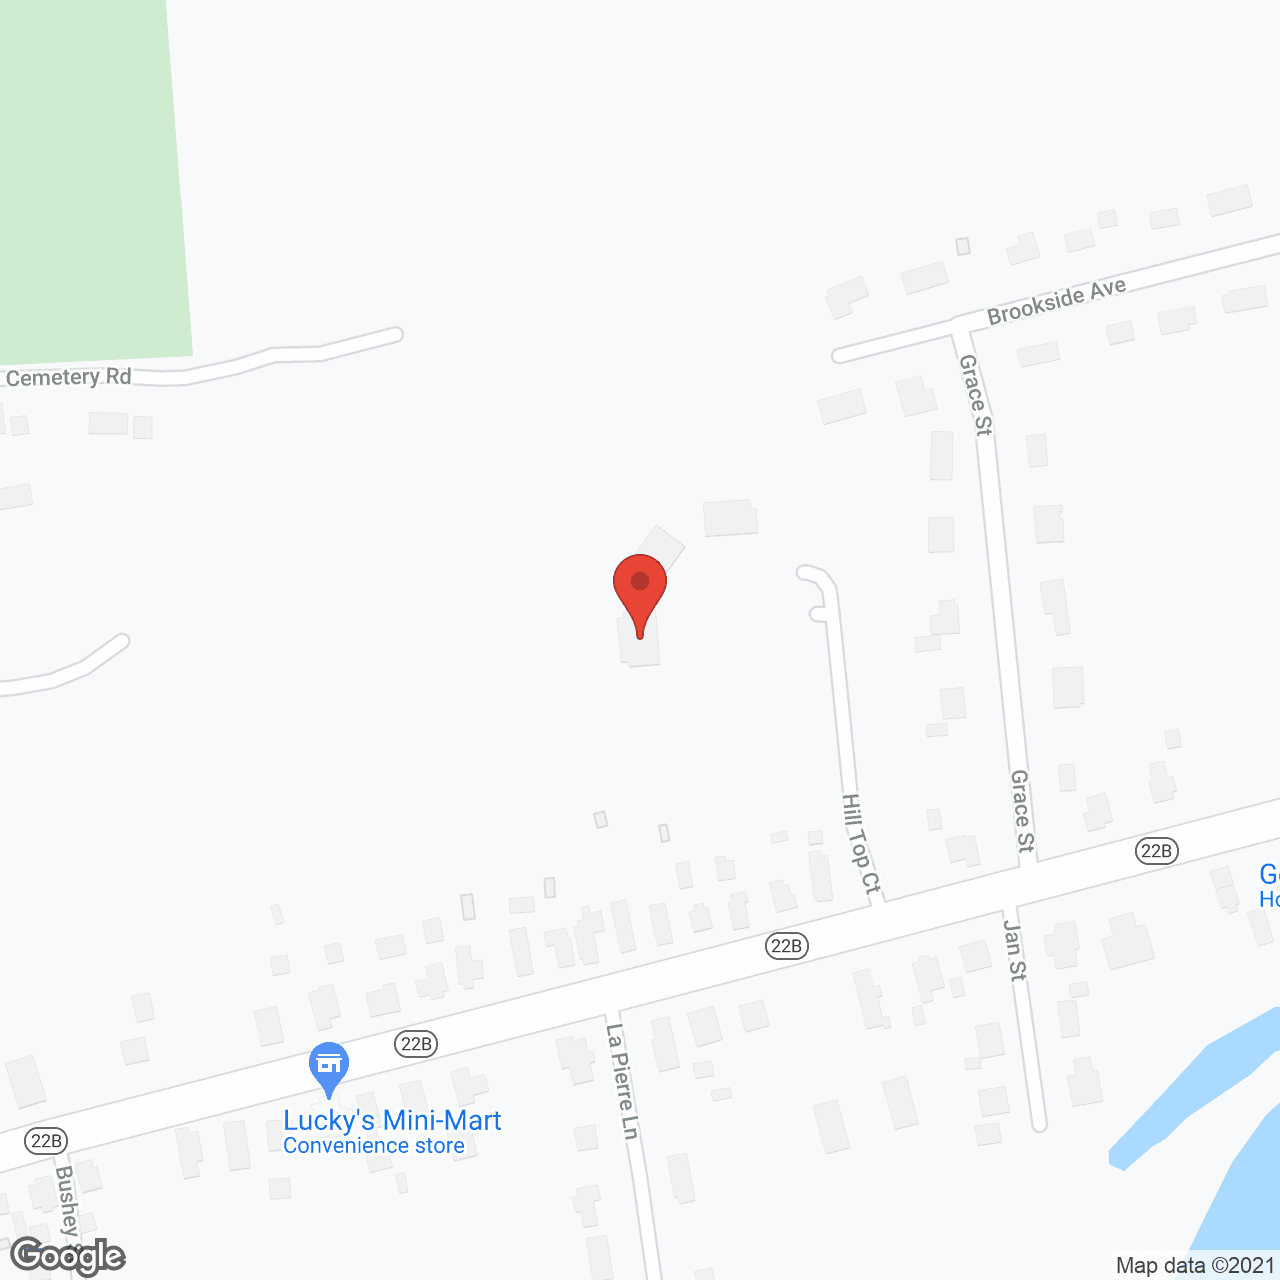 Roderick Rock Senior Housing in google map